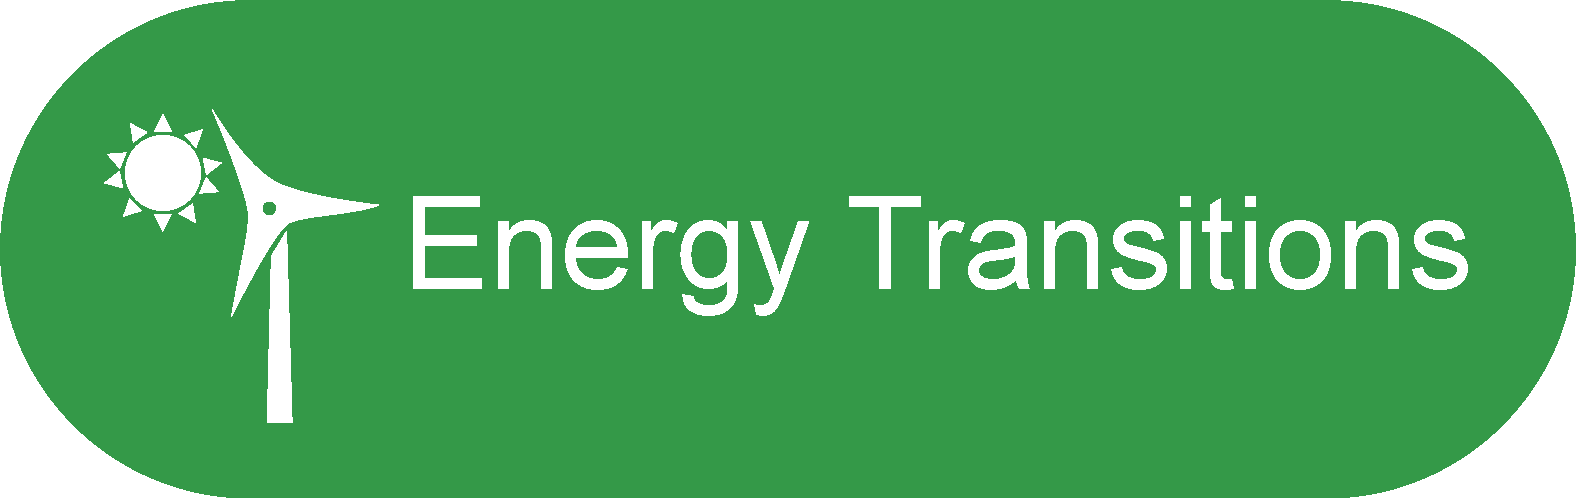 Energy Commodity Indicators – Energy Transitions